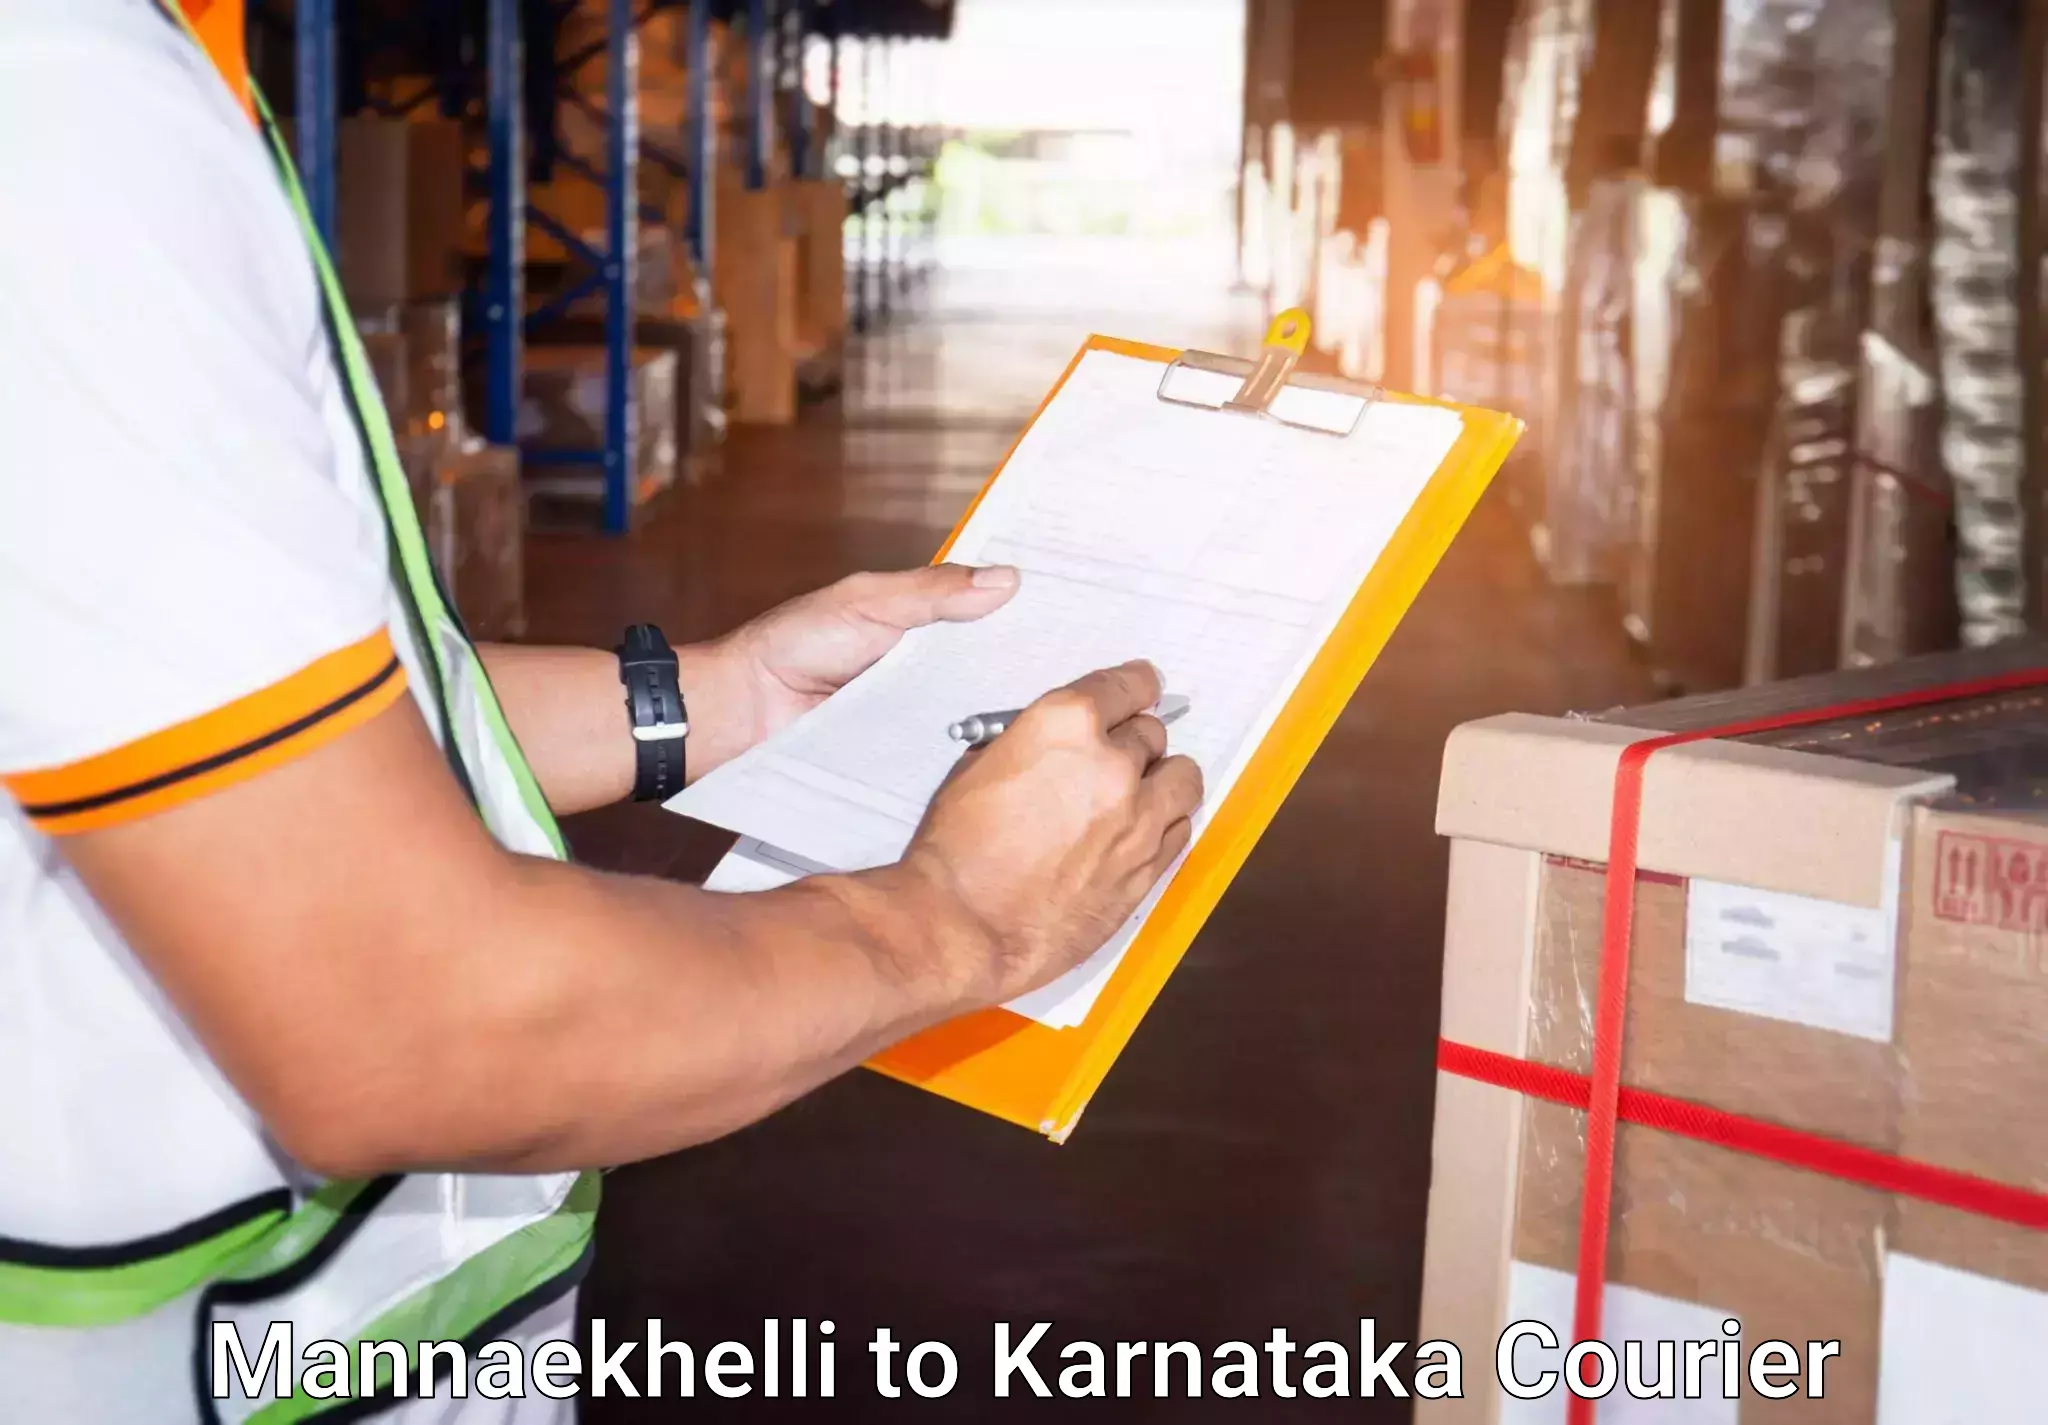 Baggage transport innovation Mannaekhelli to Karnataka